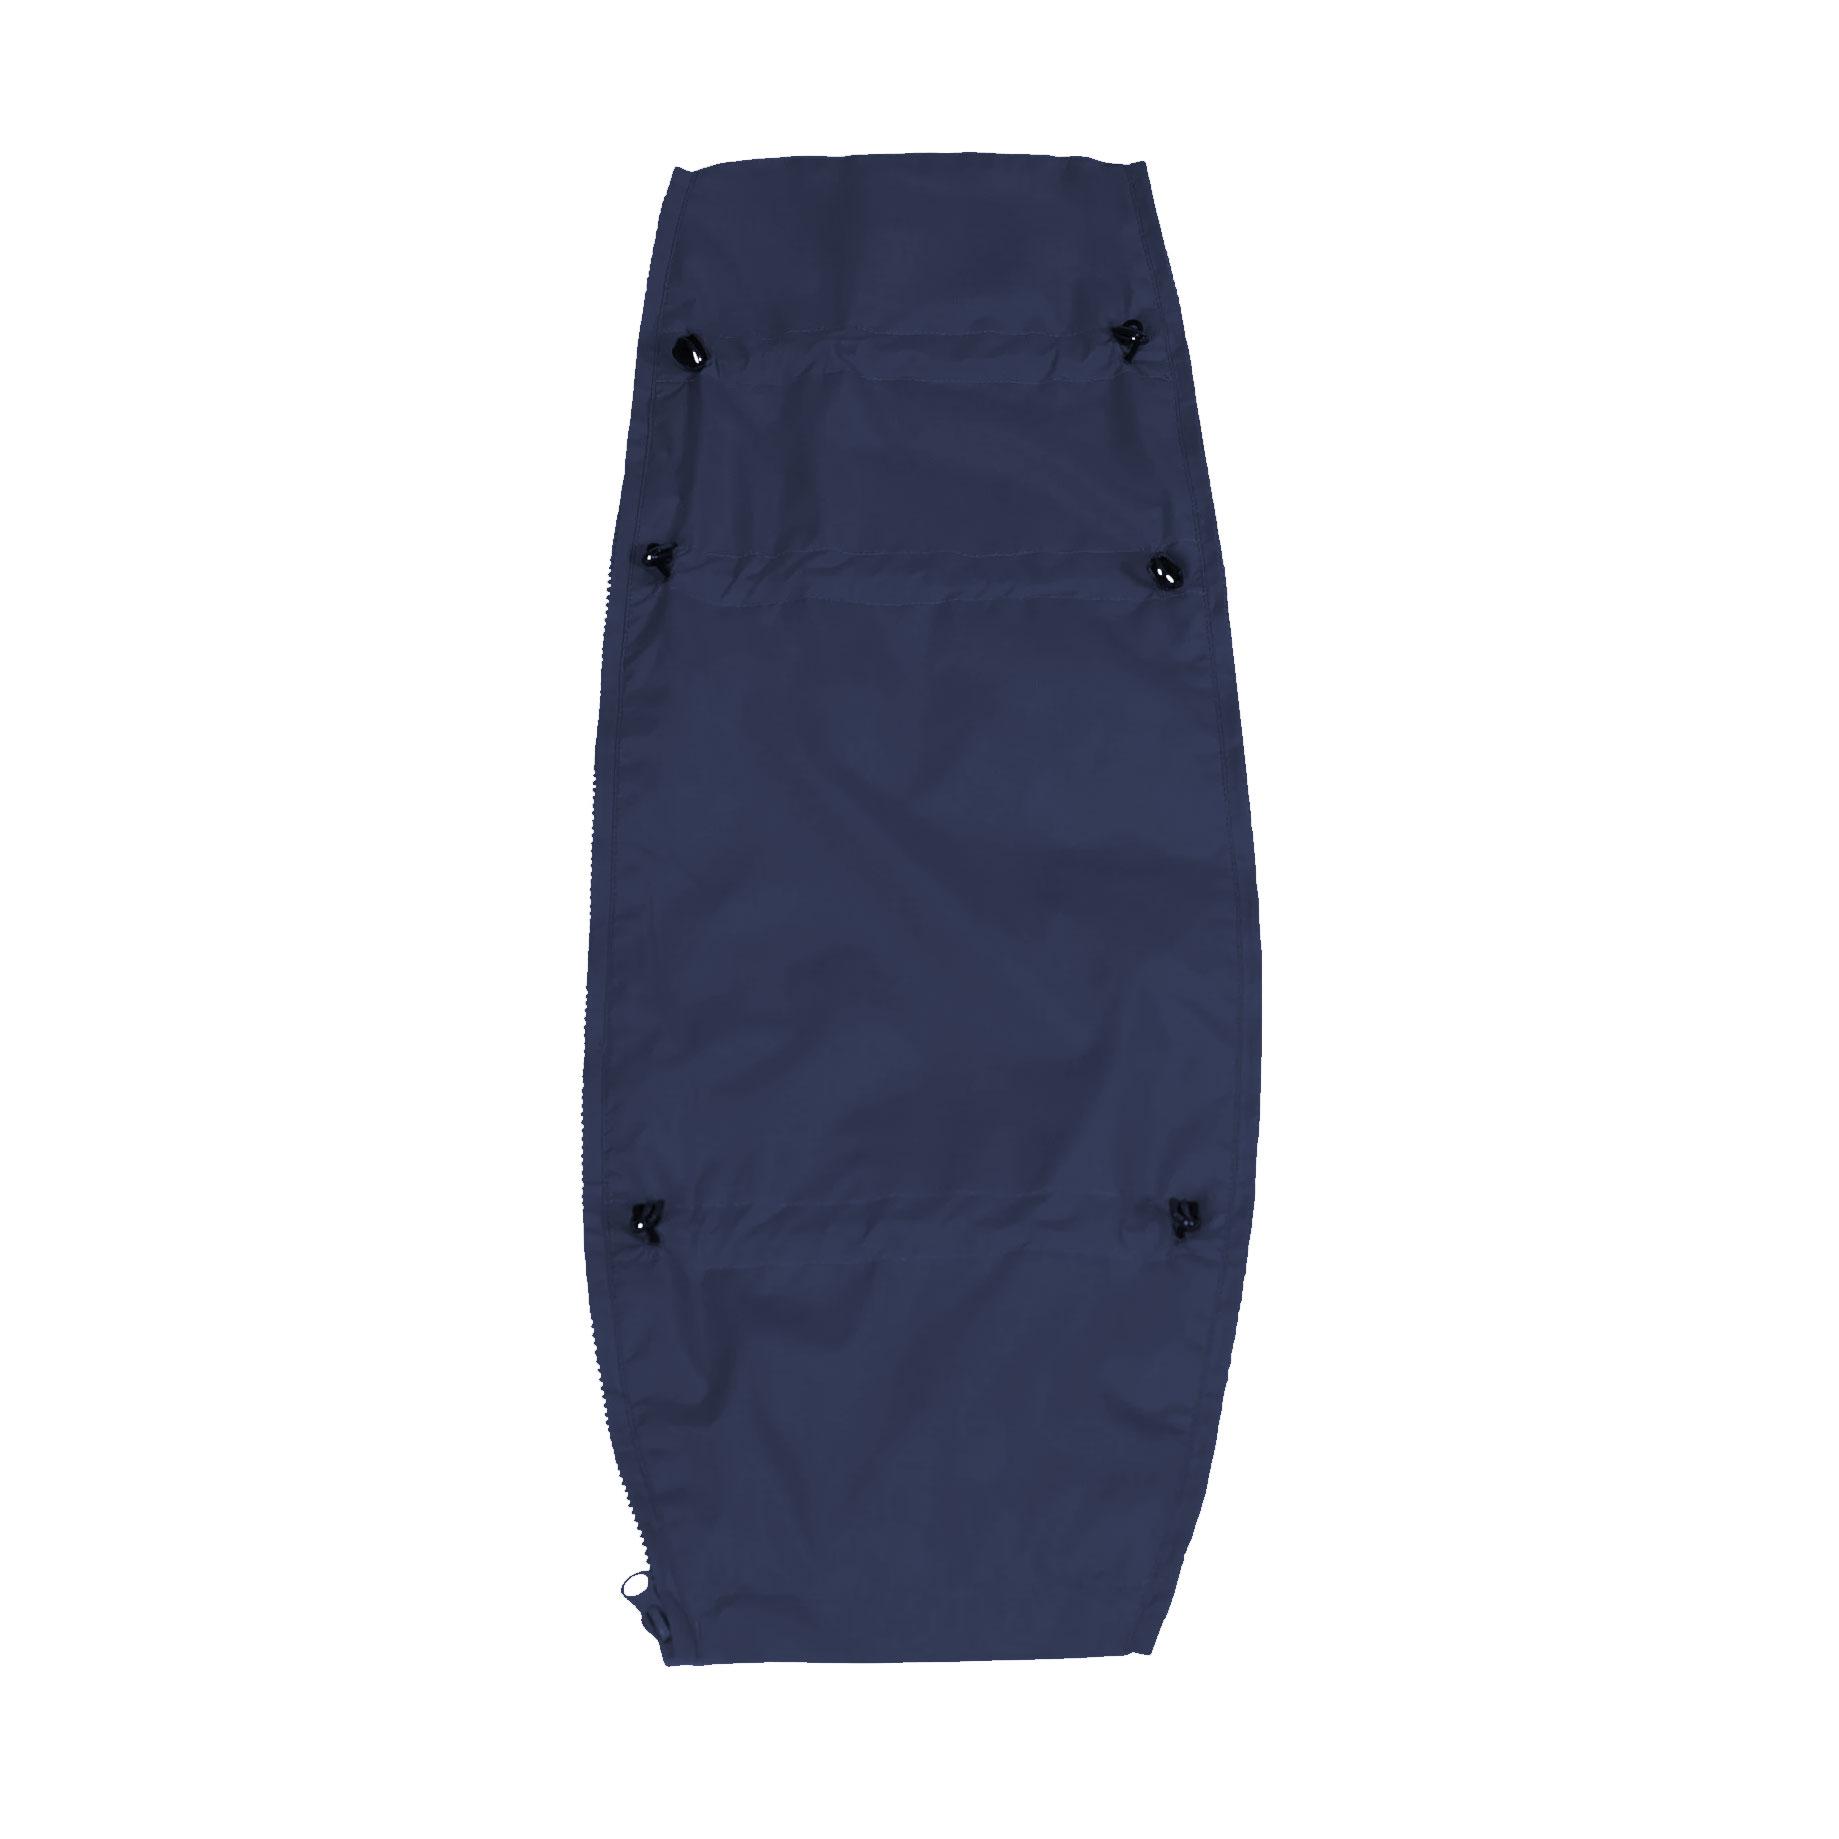 numbat-go-maternity-jacket-insert-panel-navyblue-pshop-square